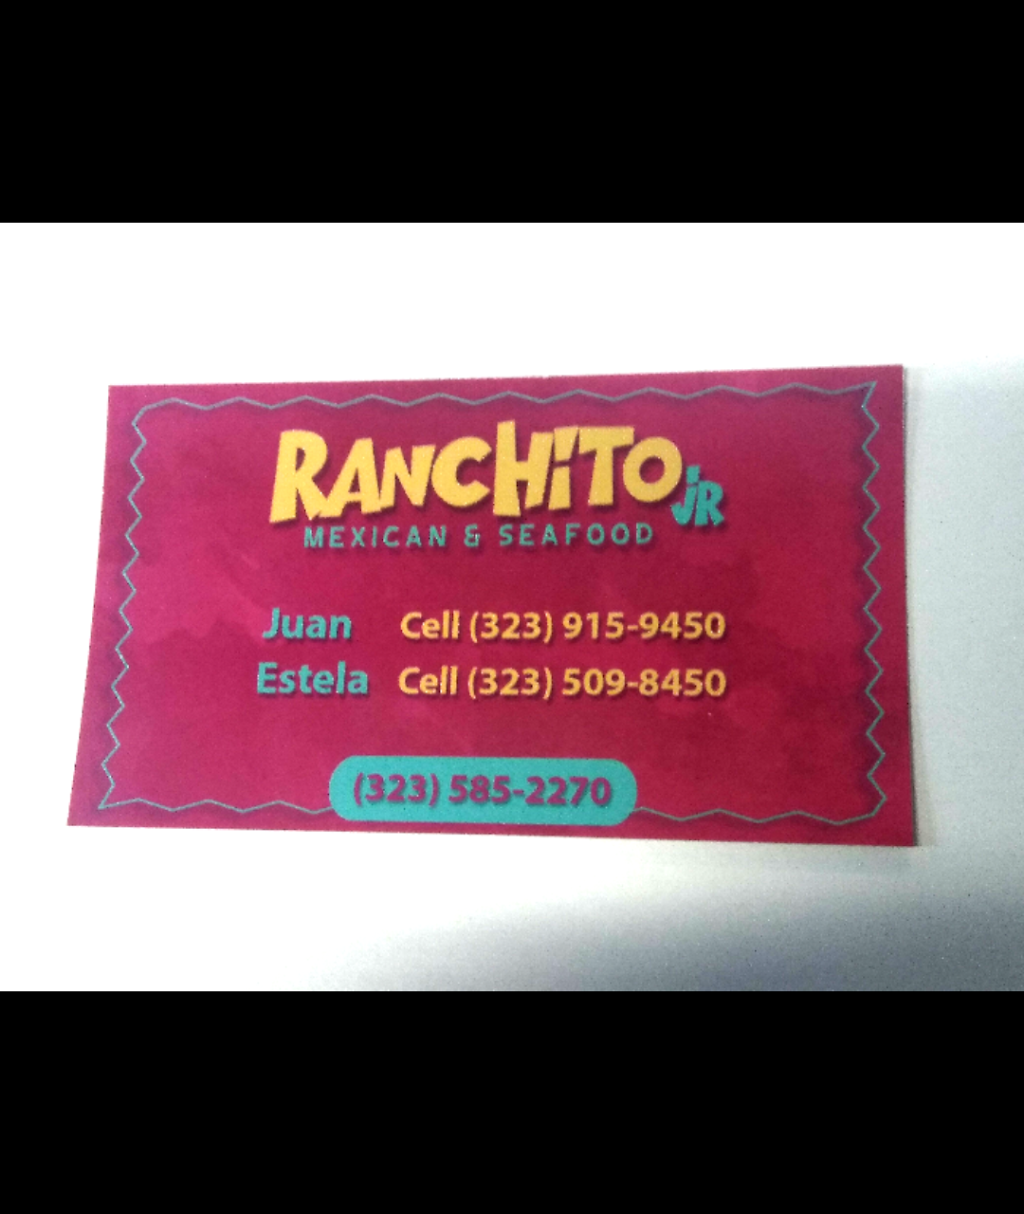 Ranchito Jr Mexican & Seafood | Firestone Park, CA 90001, USA | Phone: (323) 509-8450